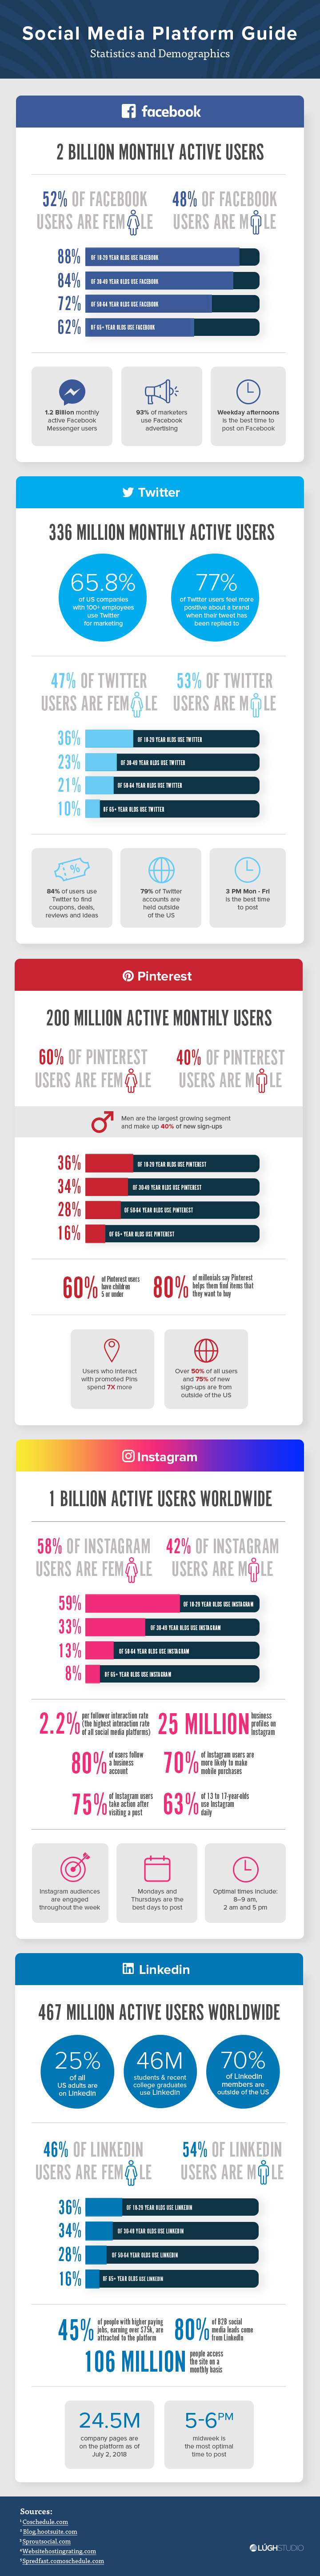 infographic providing statistics on social media